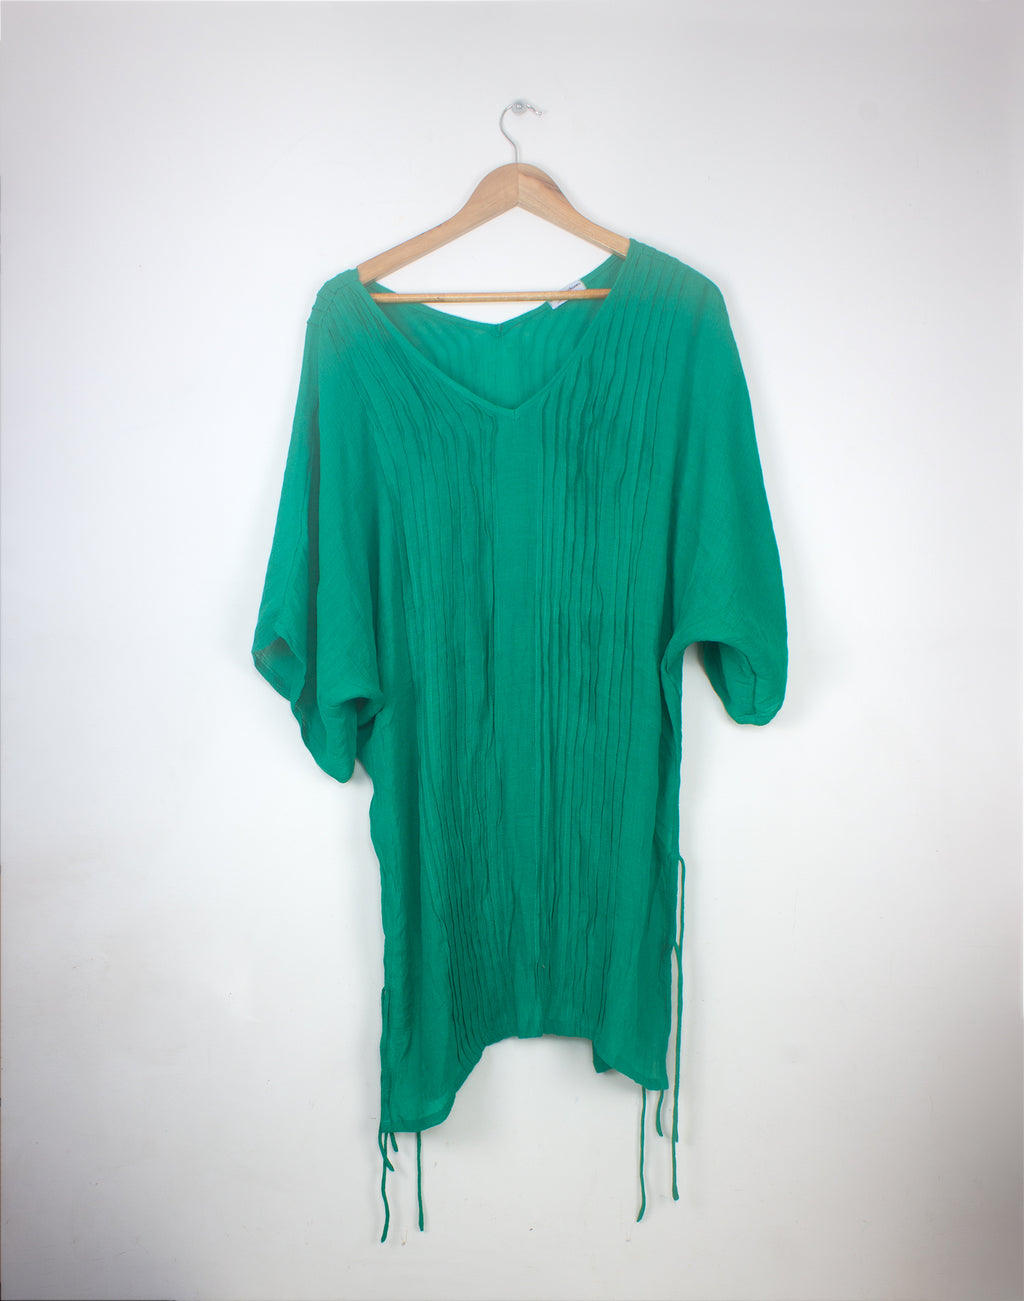 Vintage Green Smock Tunic Dress - Size M/L